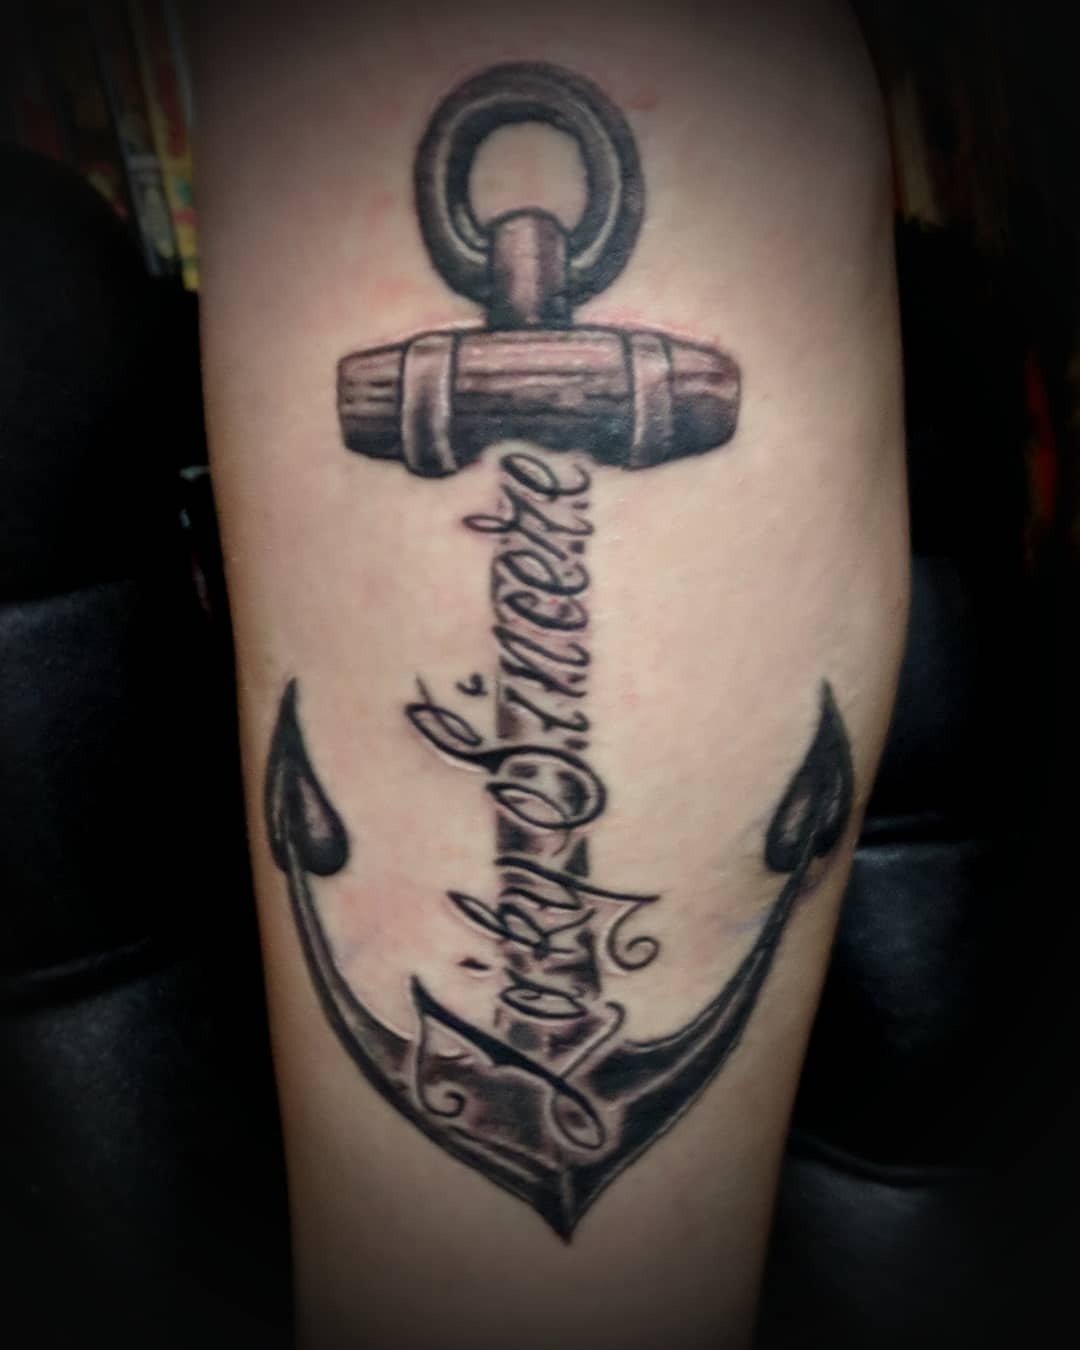 Fun little anchor I did tonight
#RyanAlmighty #almightystudios #tattoo #tattoolife #blackandgreytattoo #anchor #tattooart #tattooideas (at Jamestown, New York)
https://www.instagram.com/p/BwLWQjYlTjU/?utm_source=ig_tumblr_share&igshid=357yxokahh8u